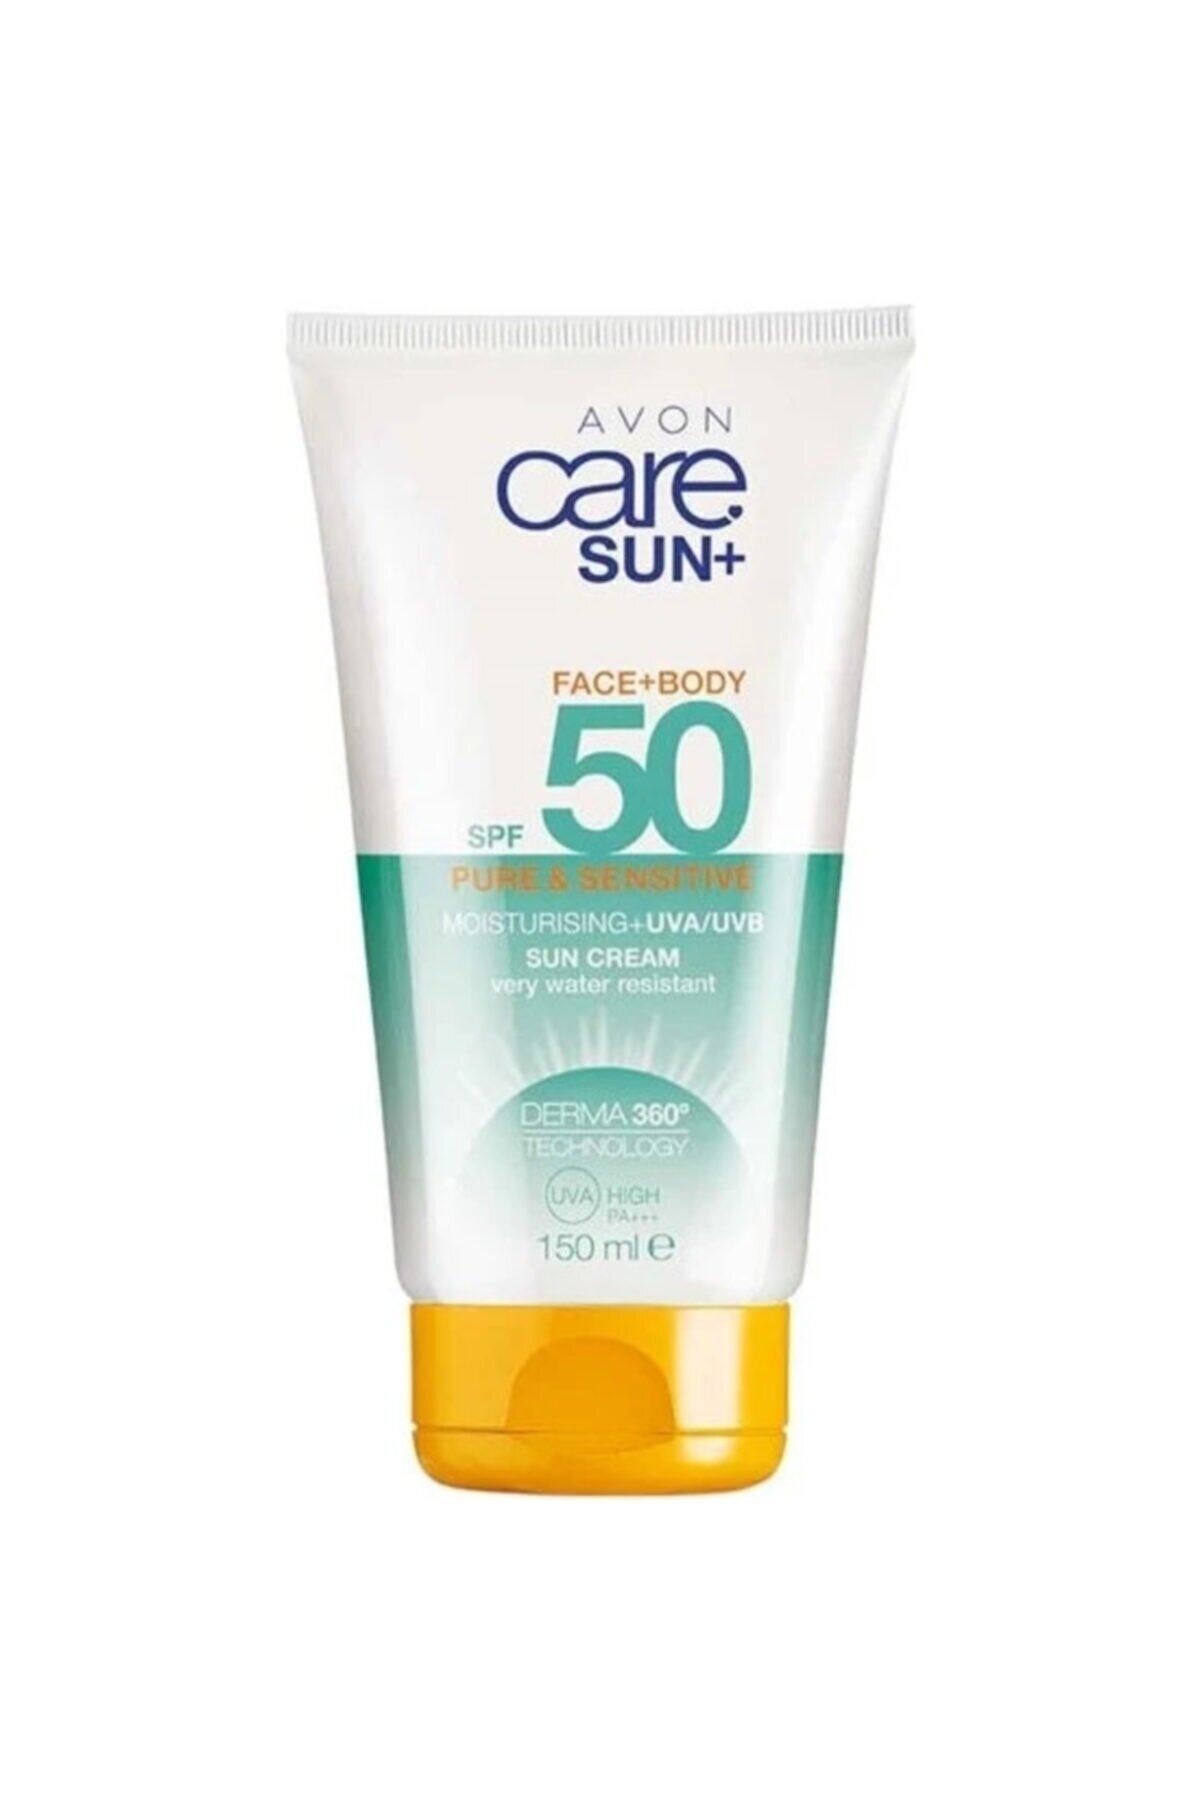 Avon Care Sun+ Pure & Sensitive Face+body Güneş Kremi 150ml